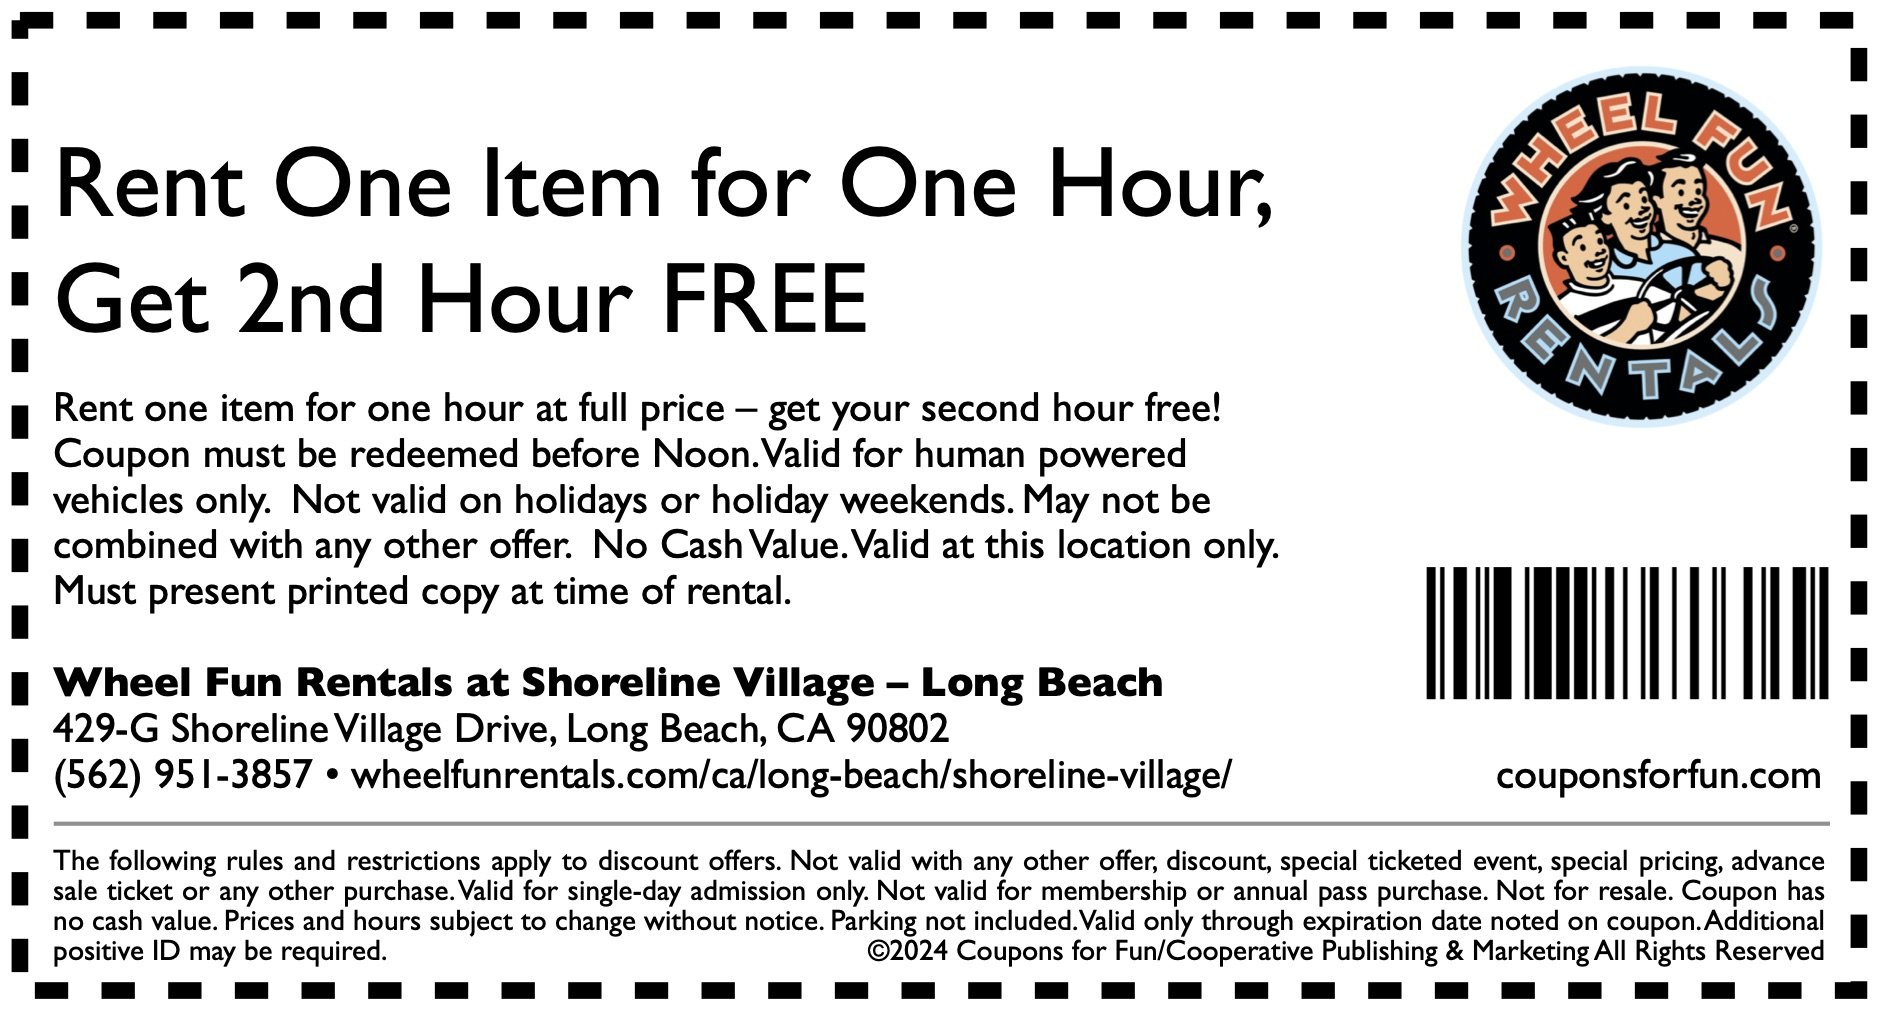 Savings coupon for Wheel Fun Rentals at Shoreline Village in Long Beach, CA